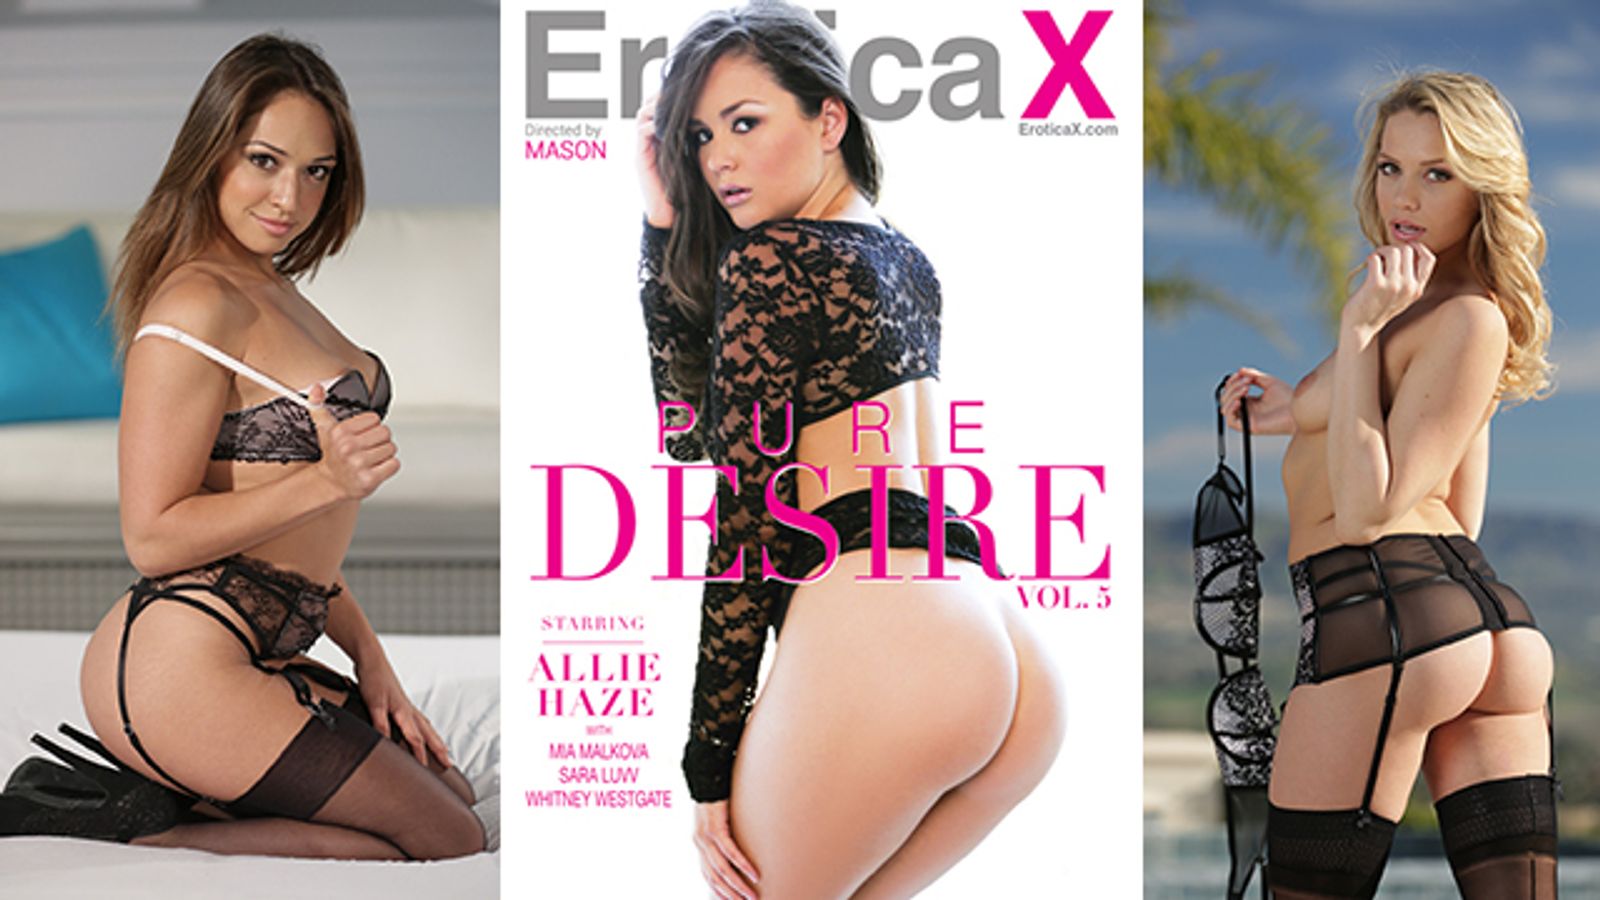 Erotica X’s ‘Pure Desire 5’ Features All-Star Cast